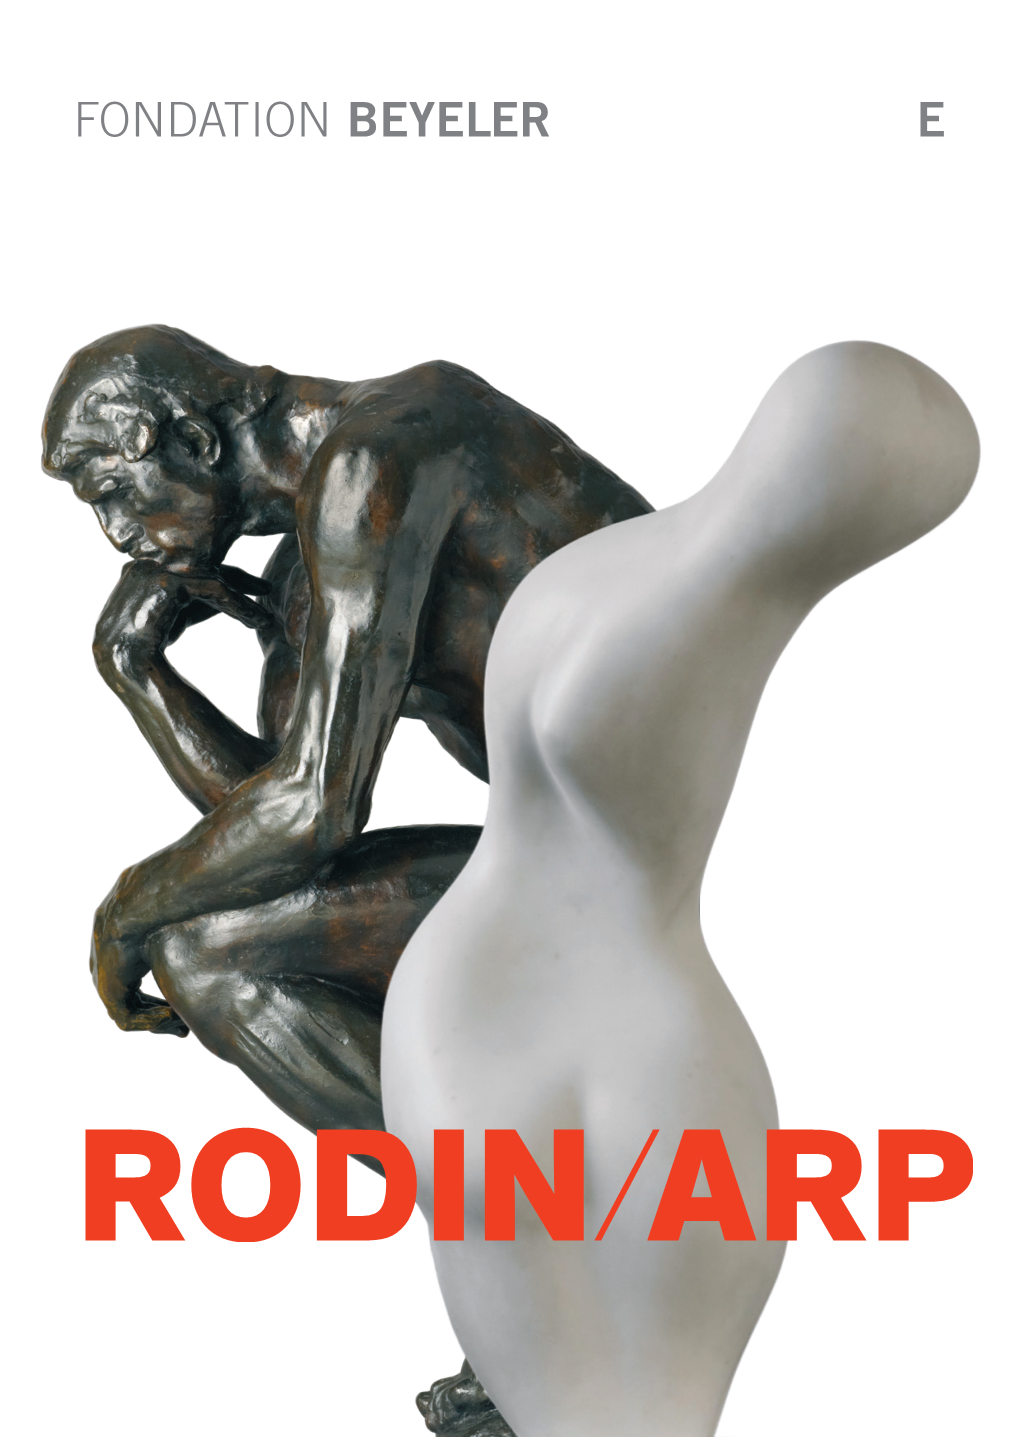 RODIN / ARP 13 December 2020 – 16 May 2021